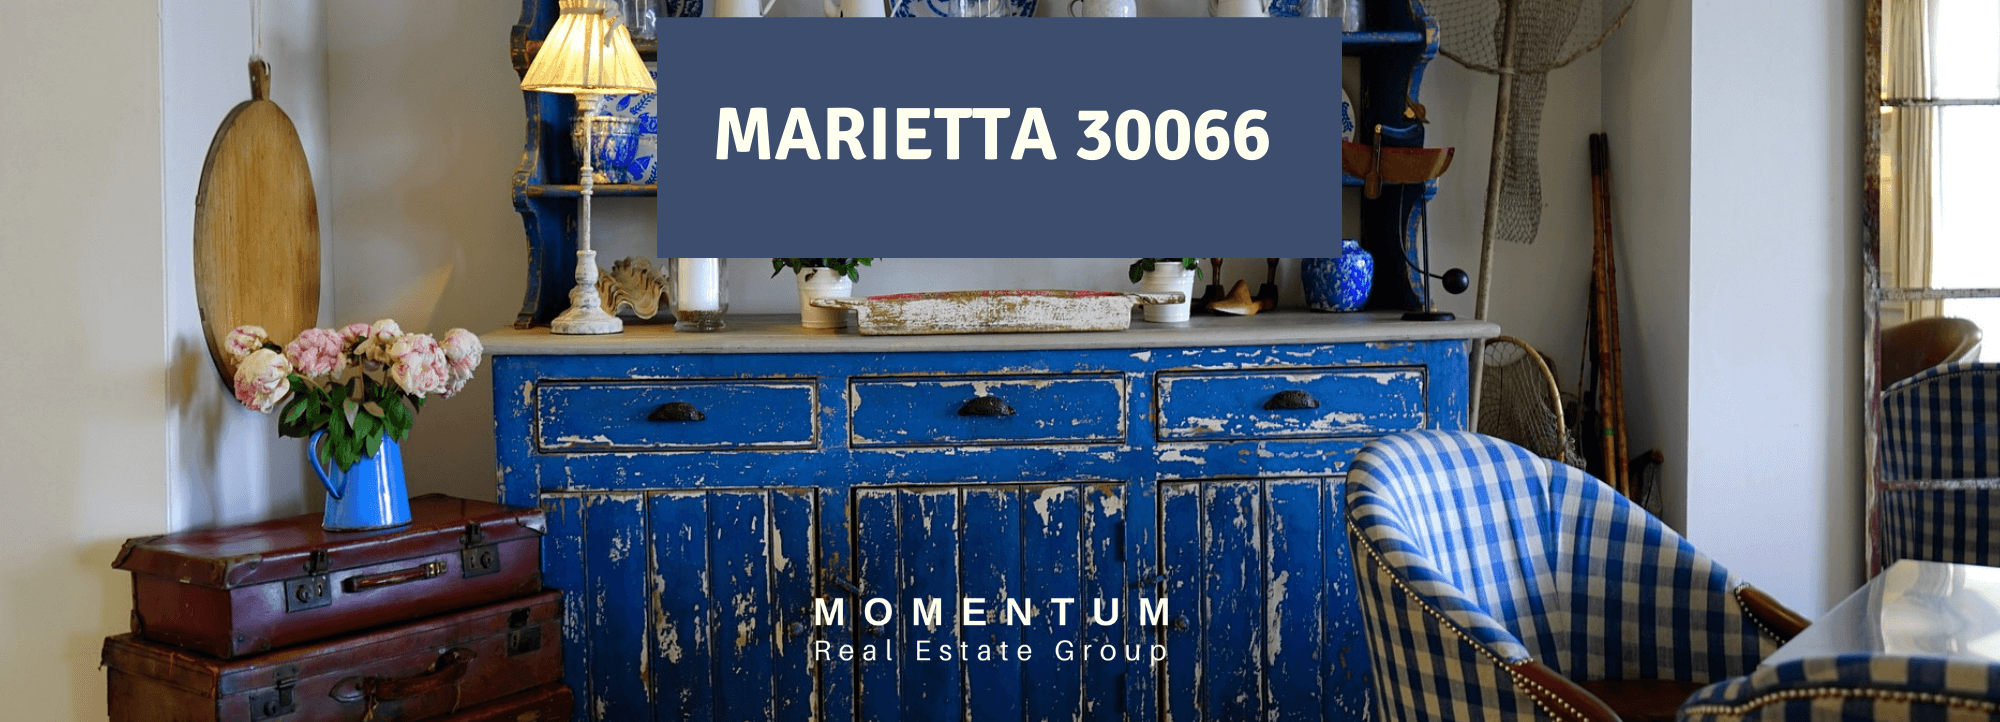 Marietta-30066-Homes-For-Sale-Jenna-Dixon-Momentum-Real-Estate-Group